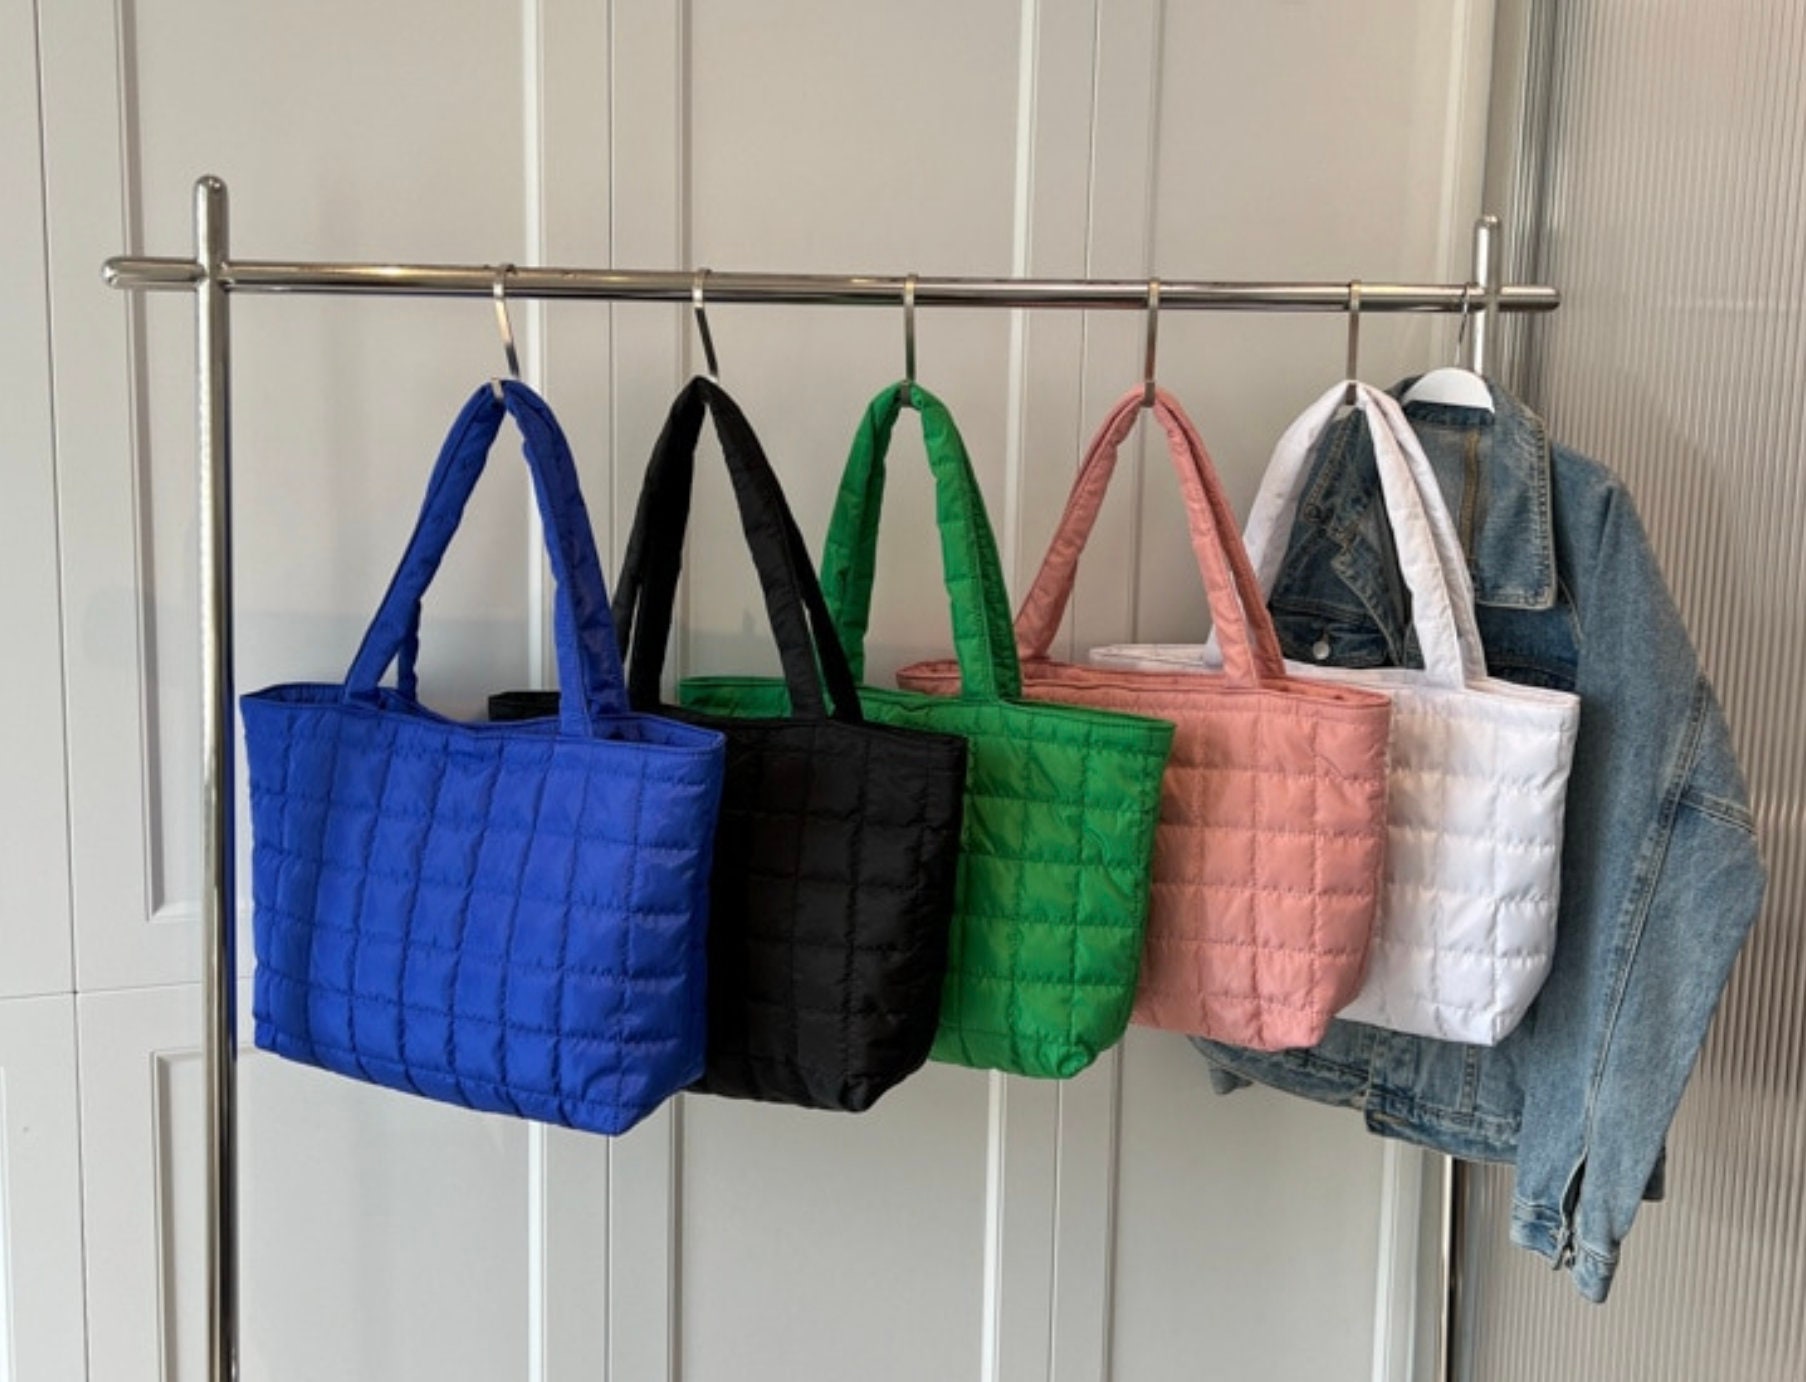 CoCopeaunt Ladys Stylish Big Shopping Bag Soft Leather Tote Bag Simple All  Match Handbags Women Ribbon Decoration Shoulder Bag 